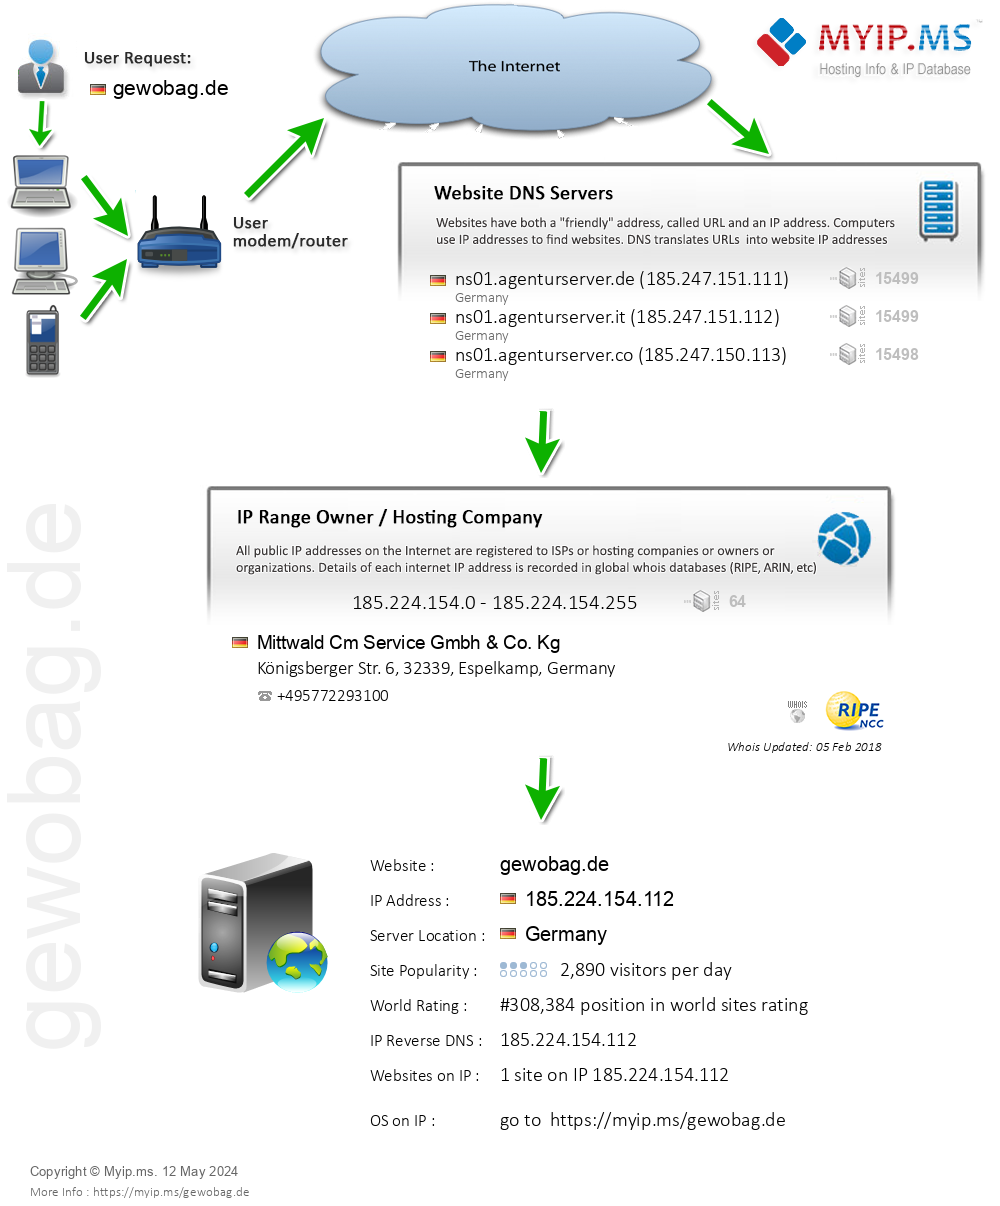 Gewobag.de - Website Hosting Visual IP Diagram